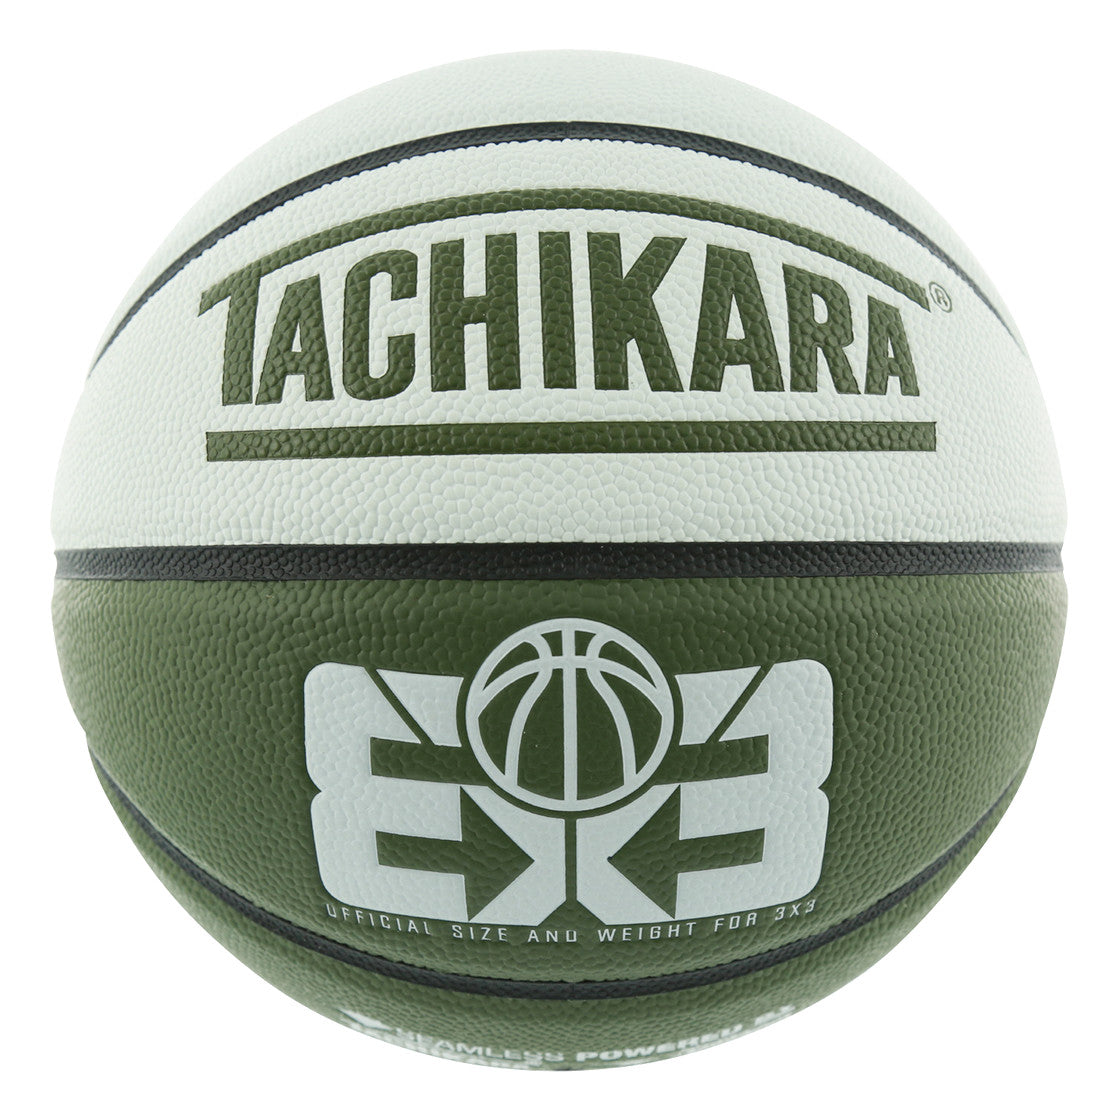 TACHIKARA 3x3 GAME BASKETBALL